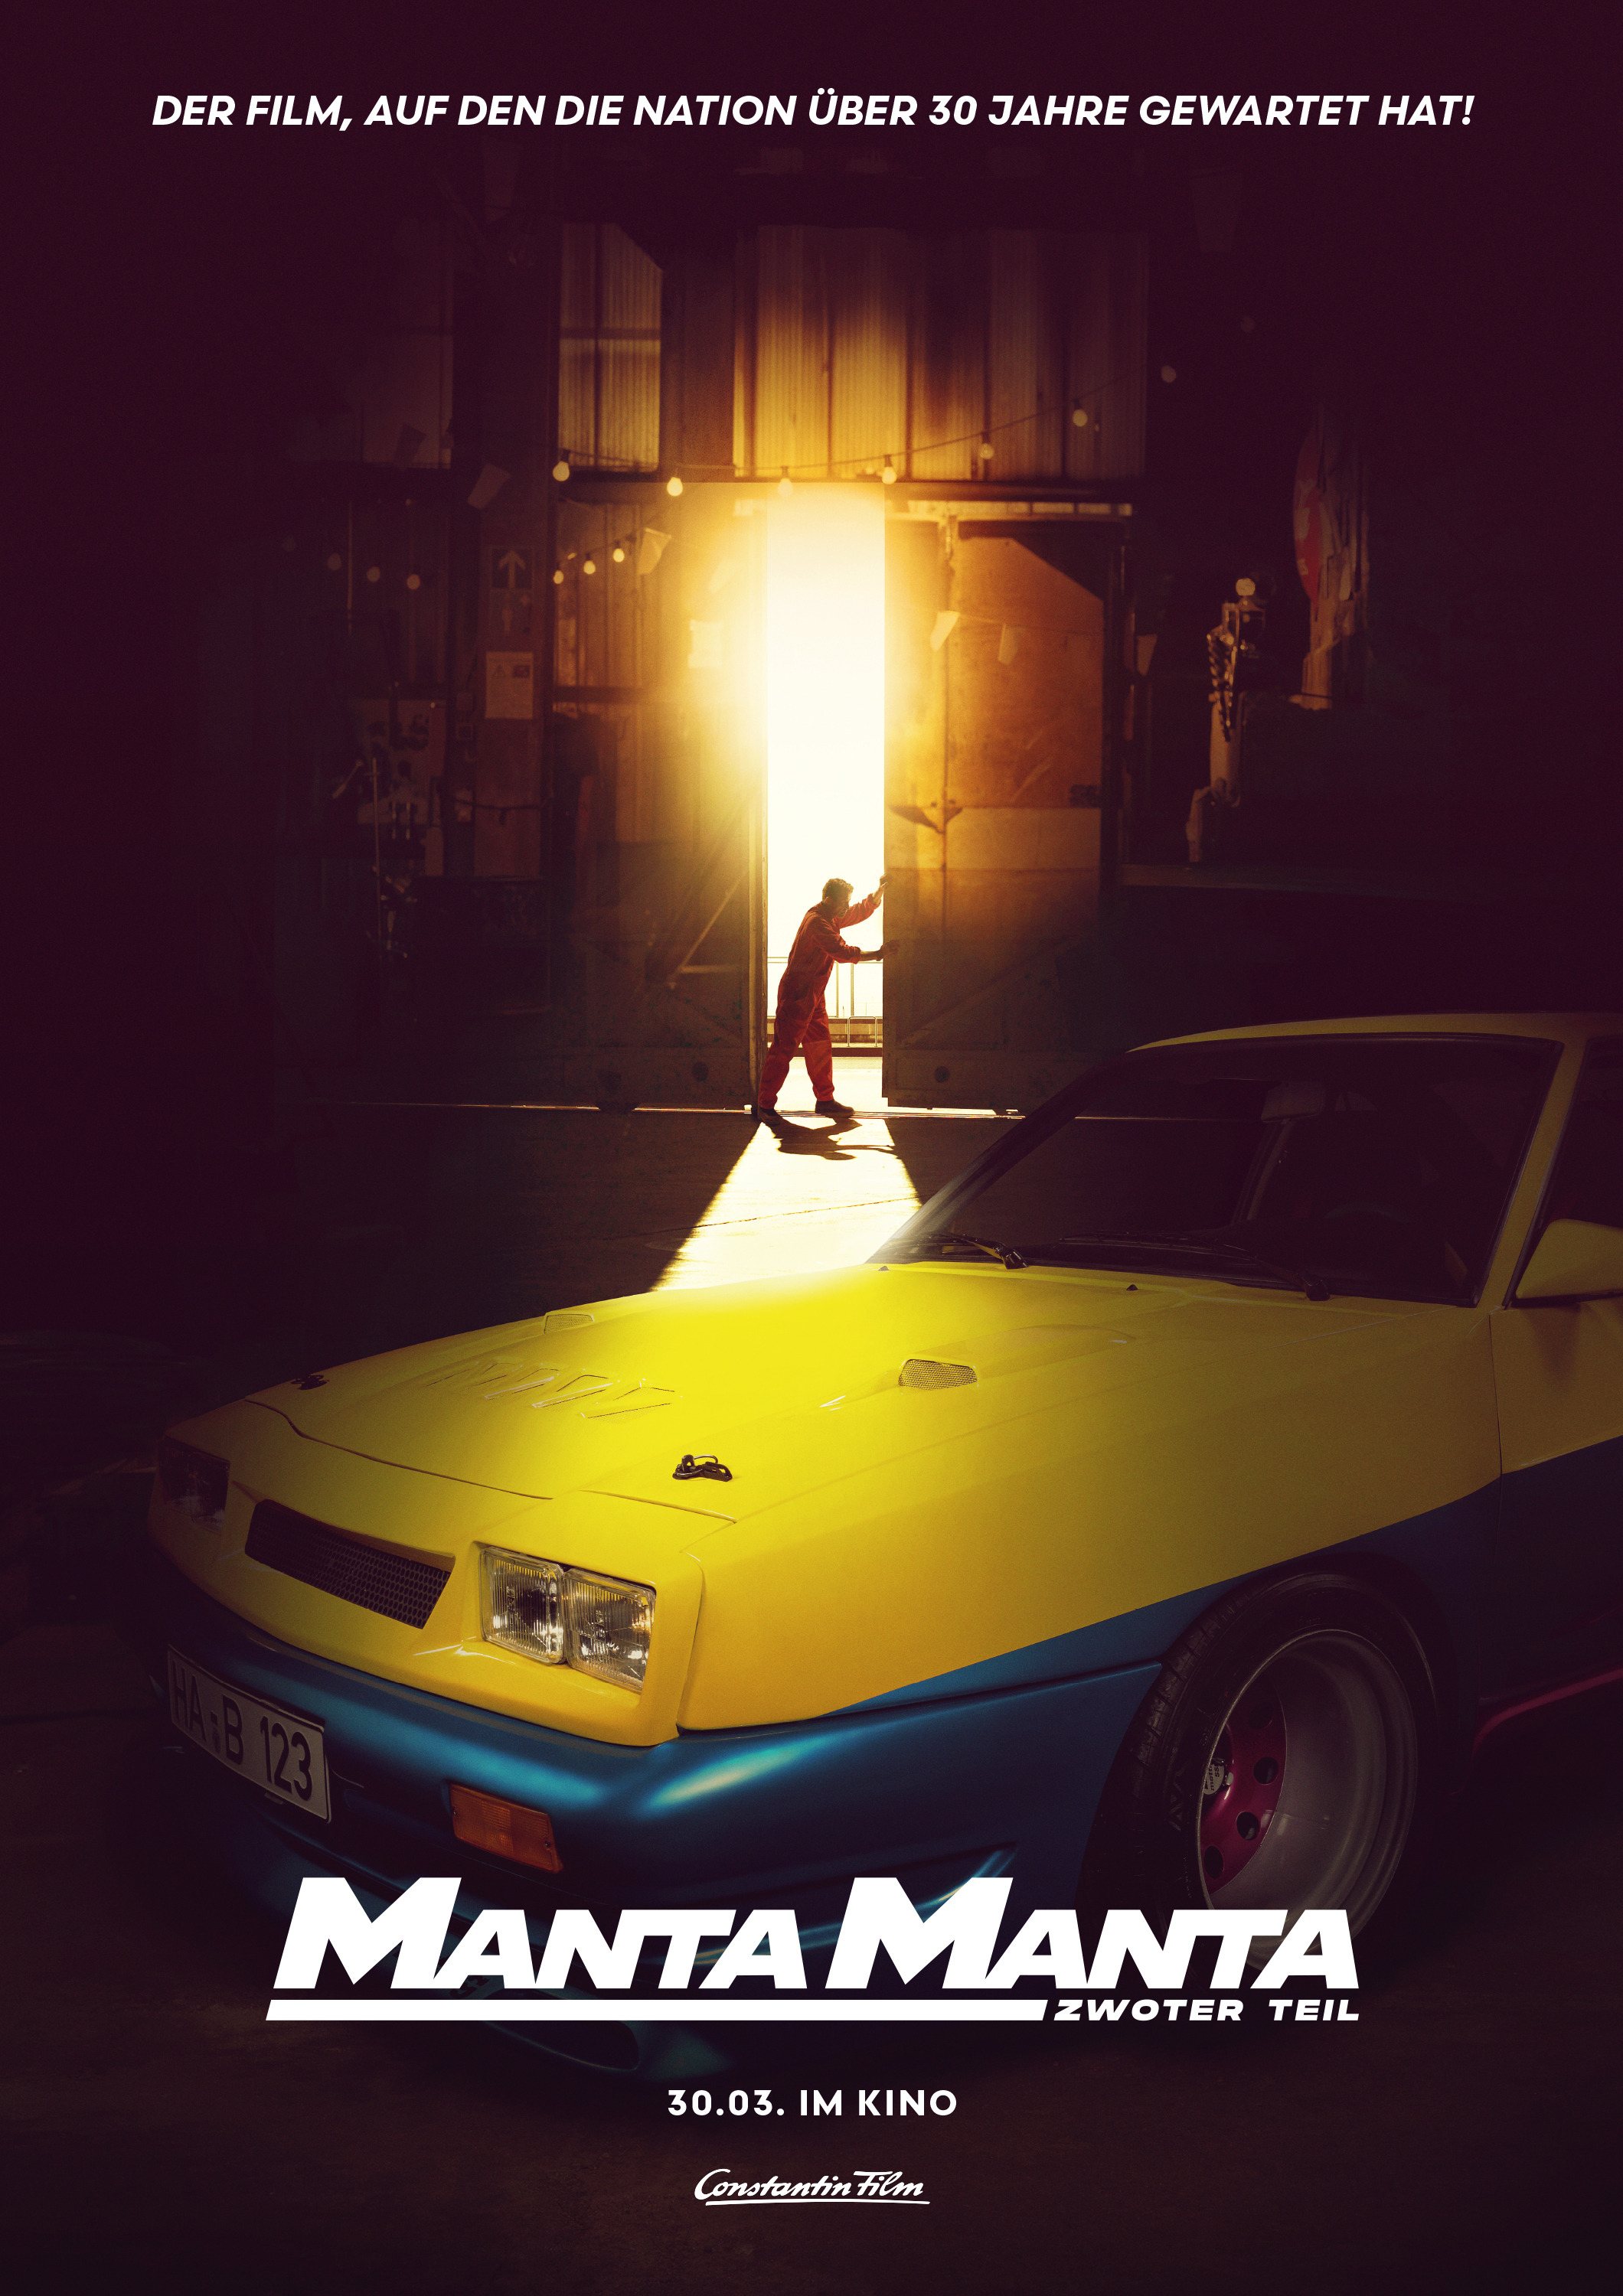 Mega Sized Movie Poster Image for Manta, Manta - Zwoter Teil (#4 of 5)